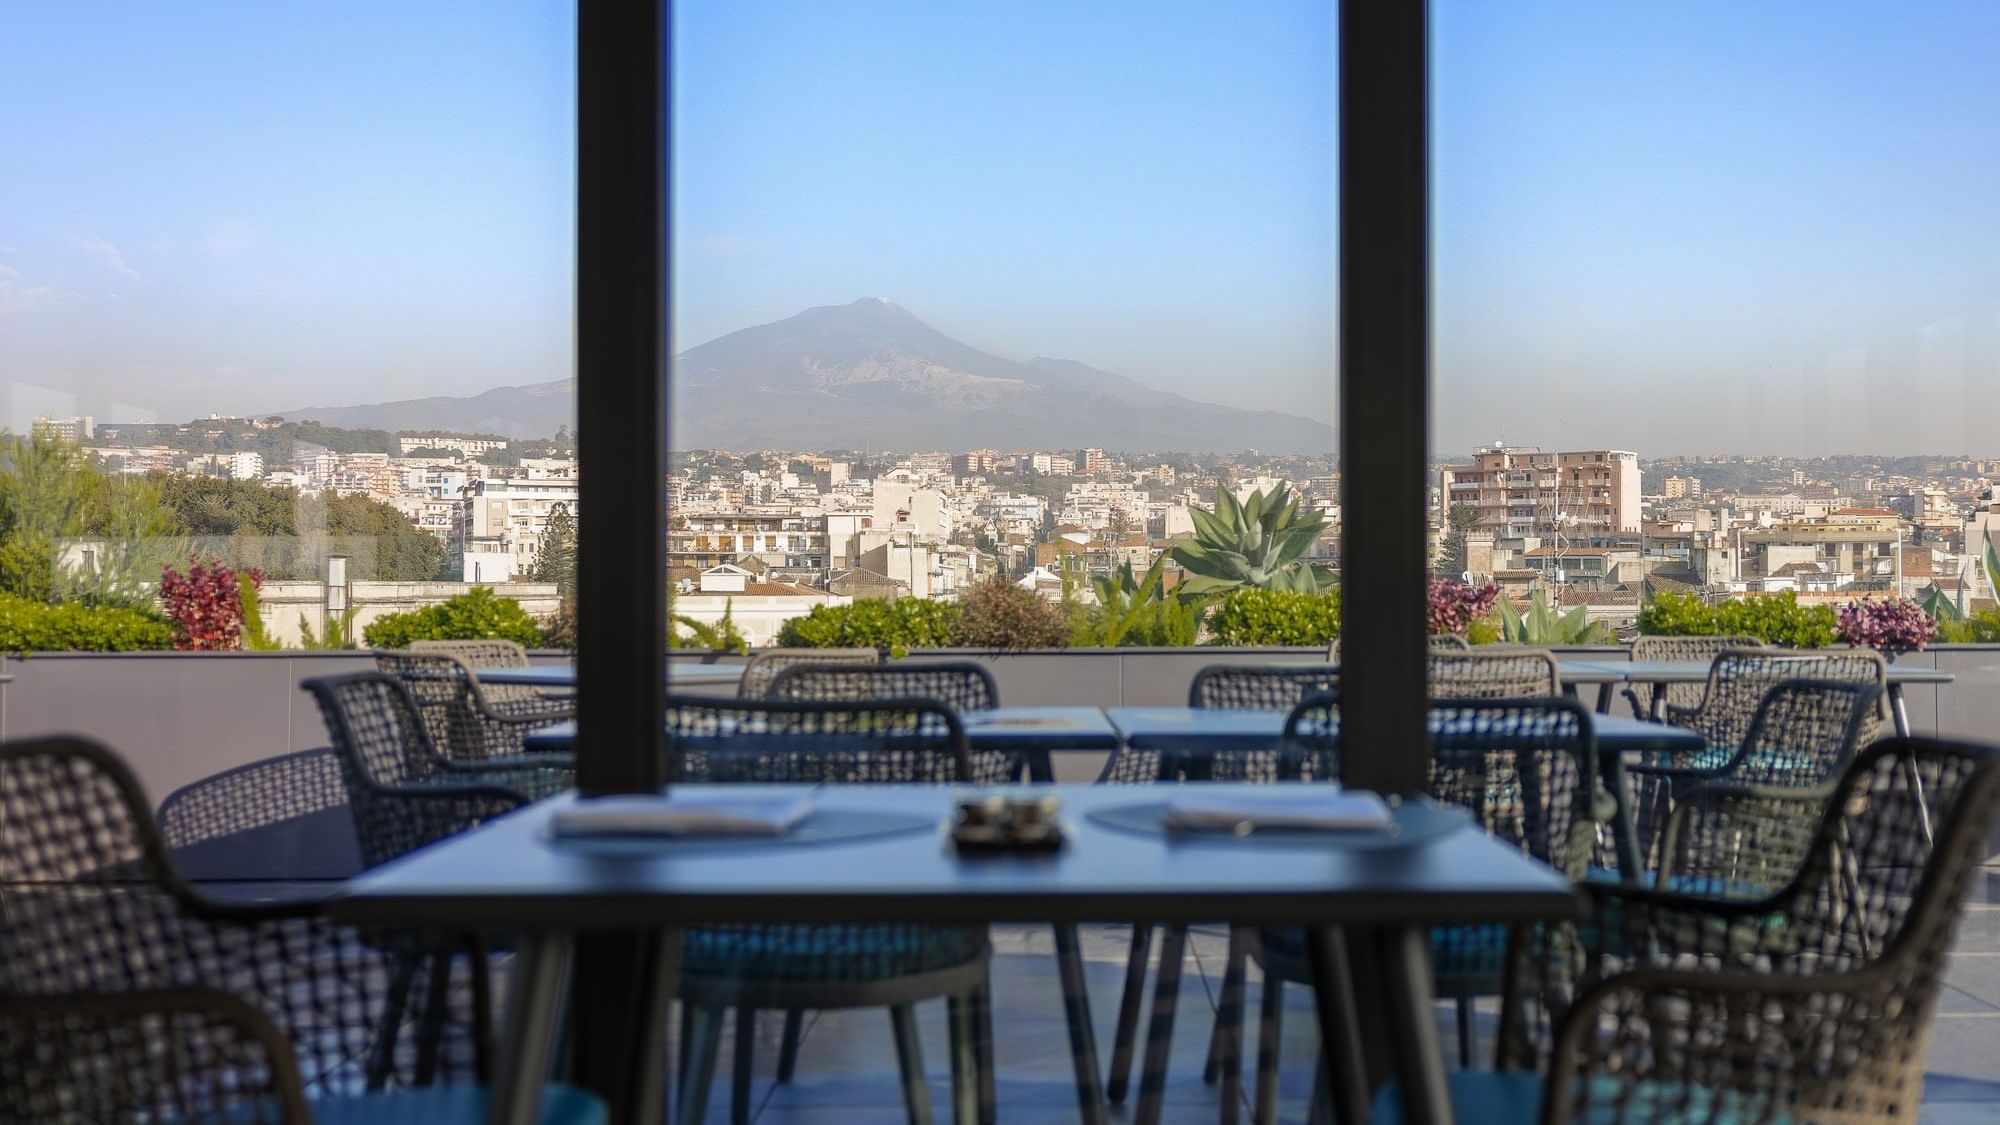 Etnea Roof Bar & Restaurant with views of Etna